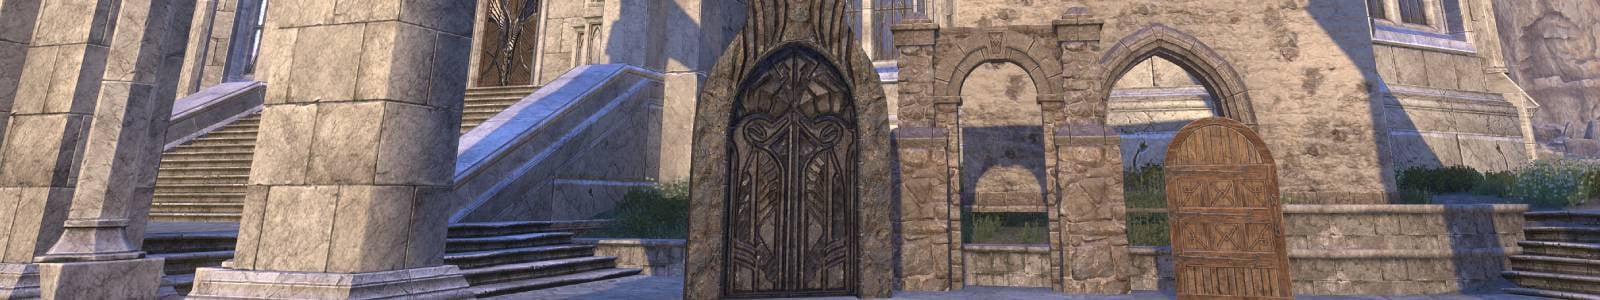 Elsweyr Gate, Garden - ESO header